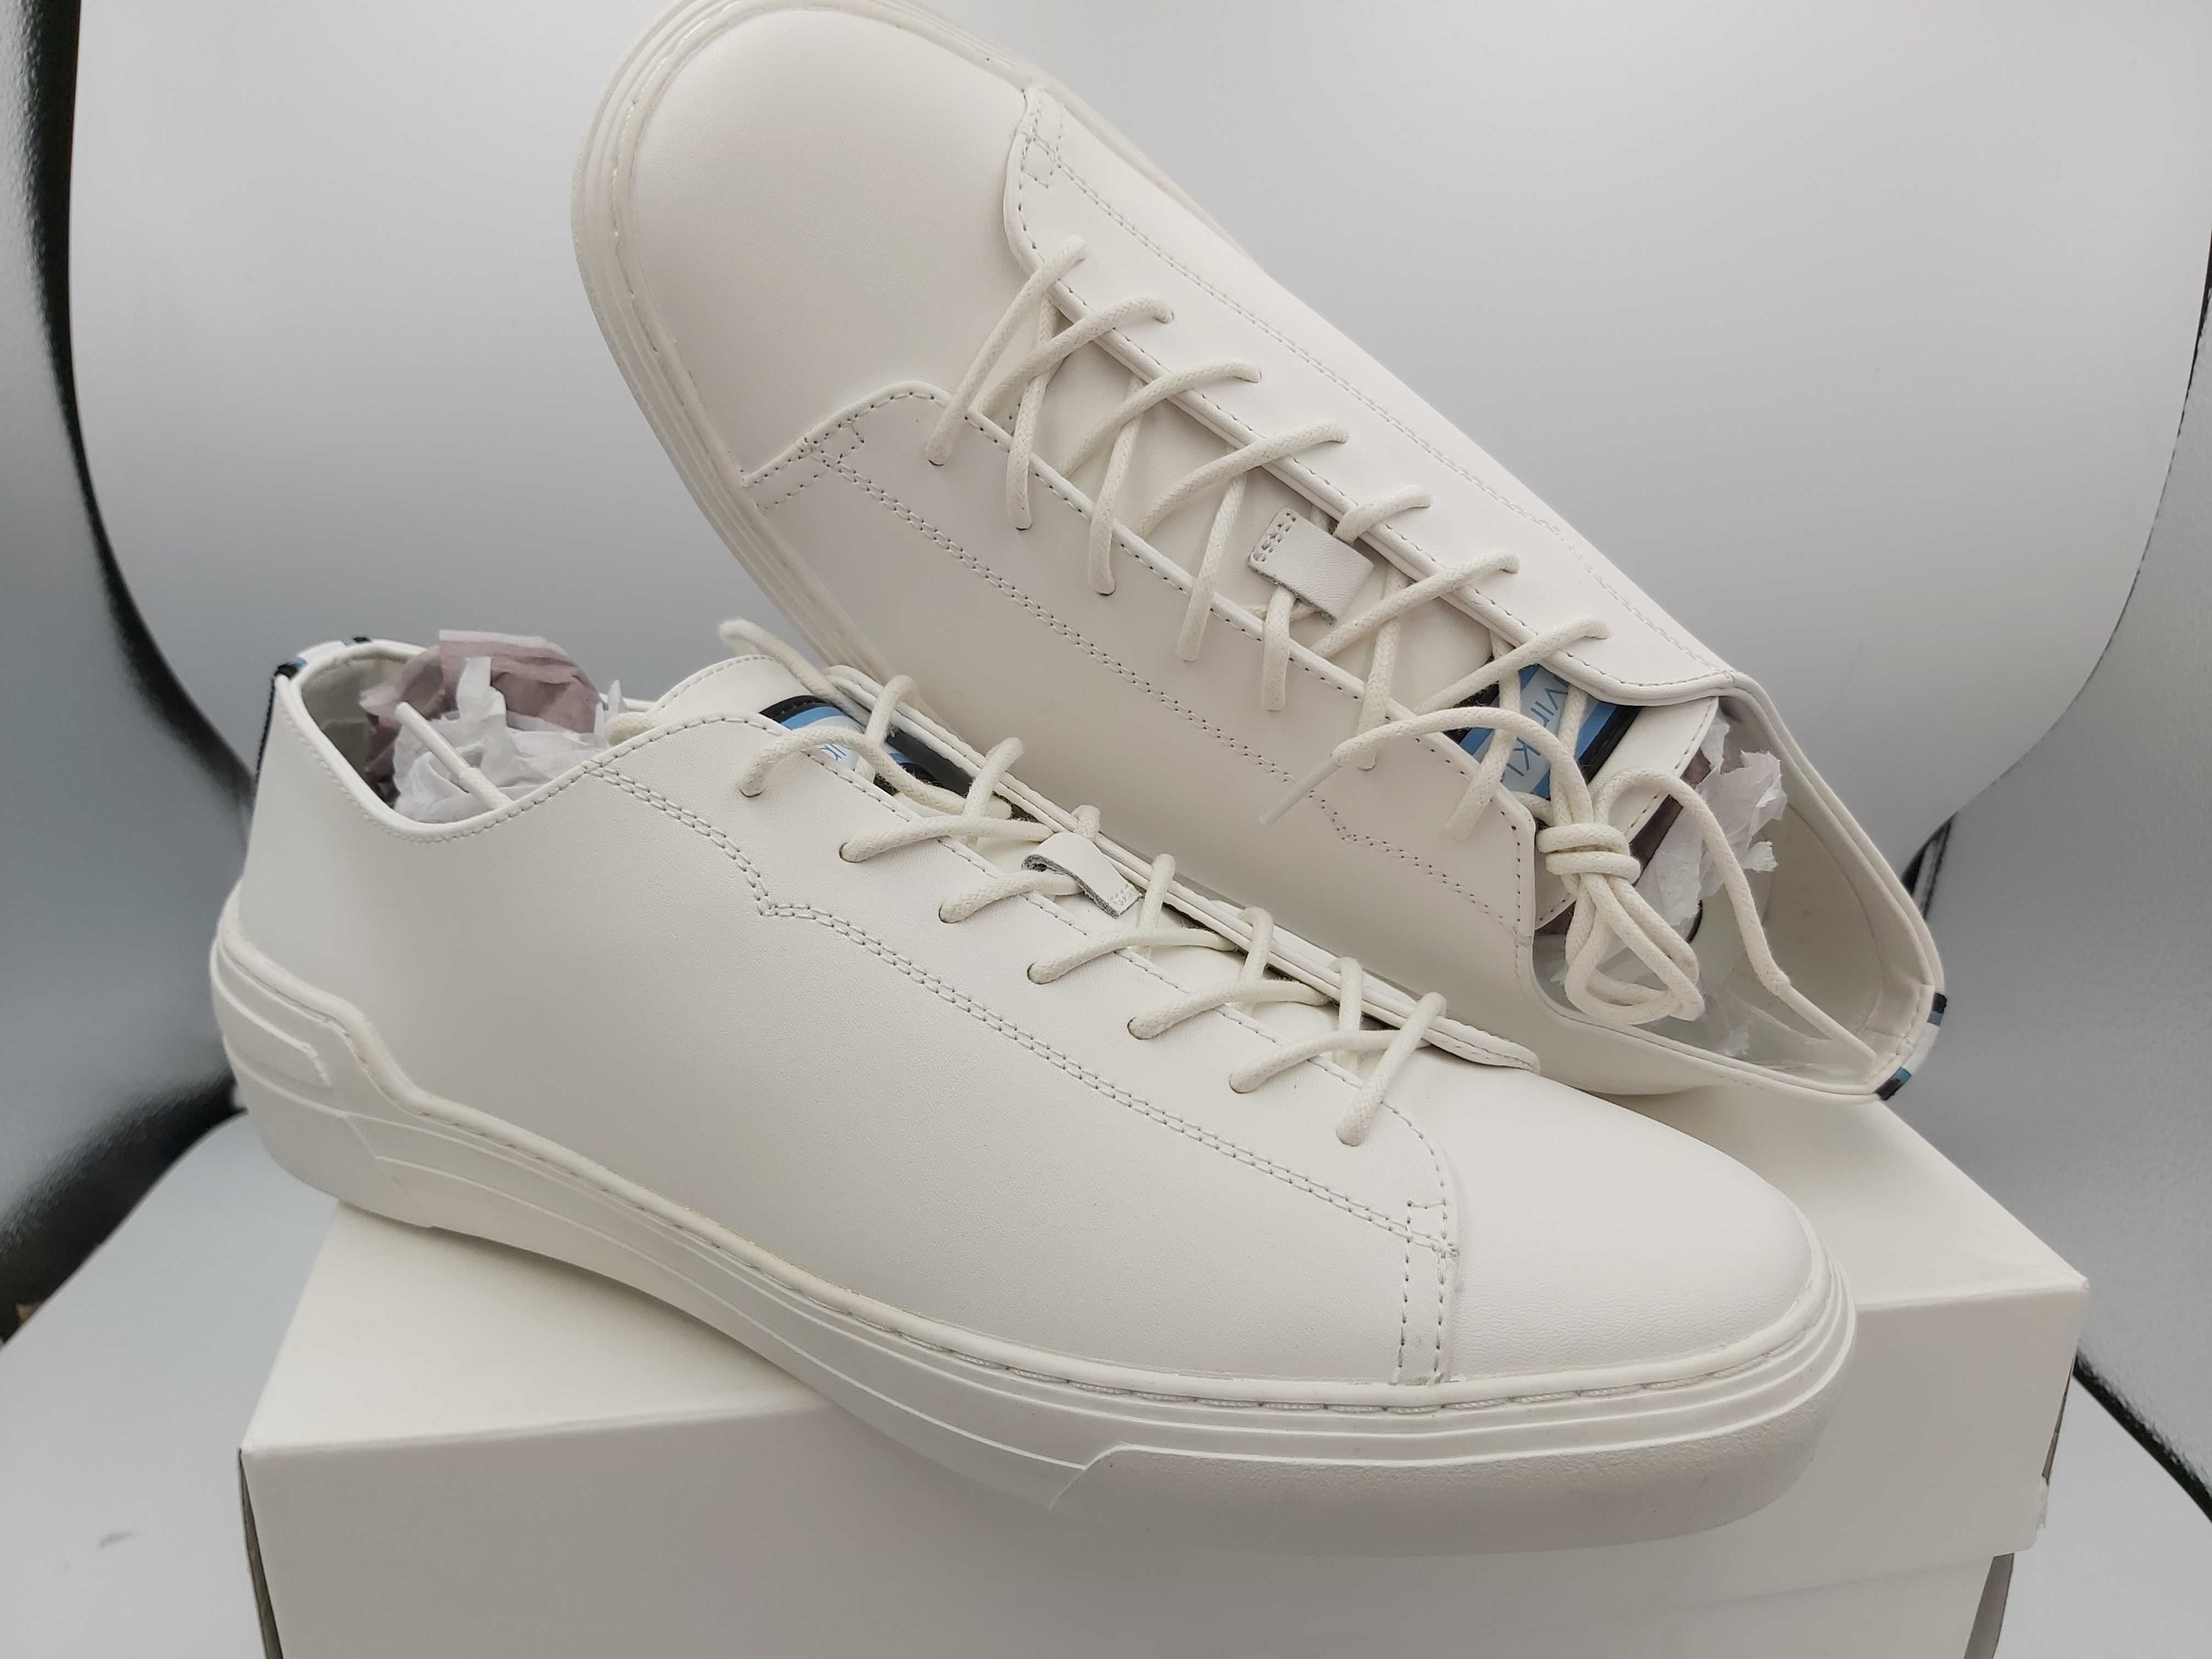 NOWE sneakersy CALVIN KLEIN octavian trampki białe rozmiar 43